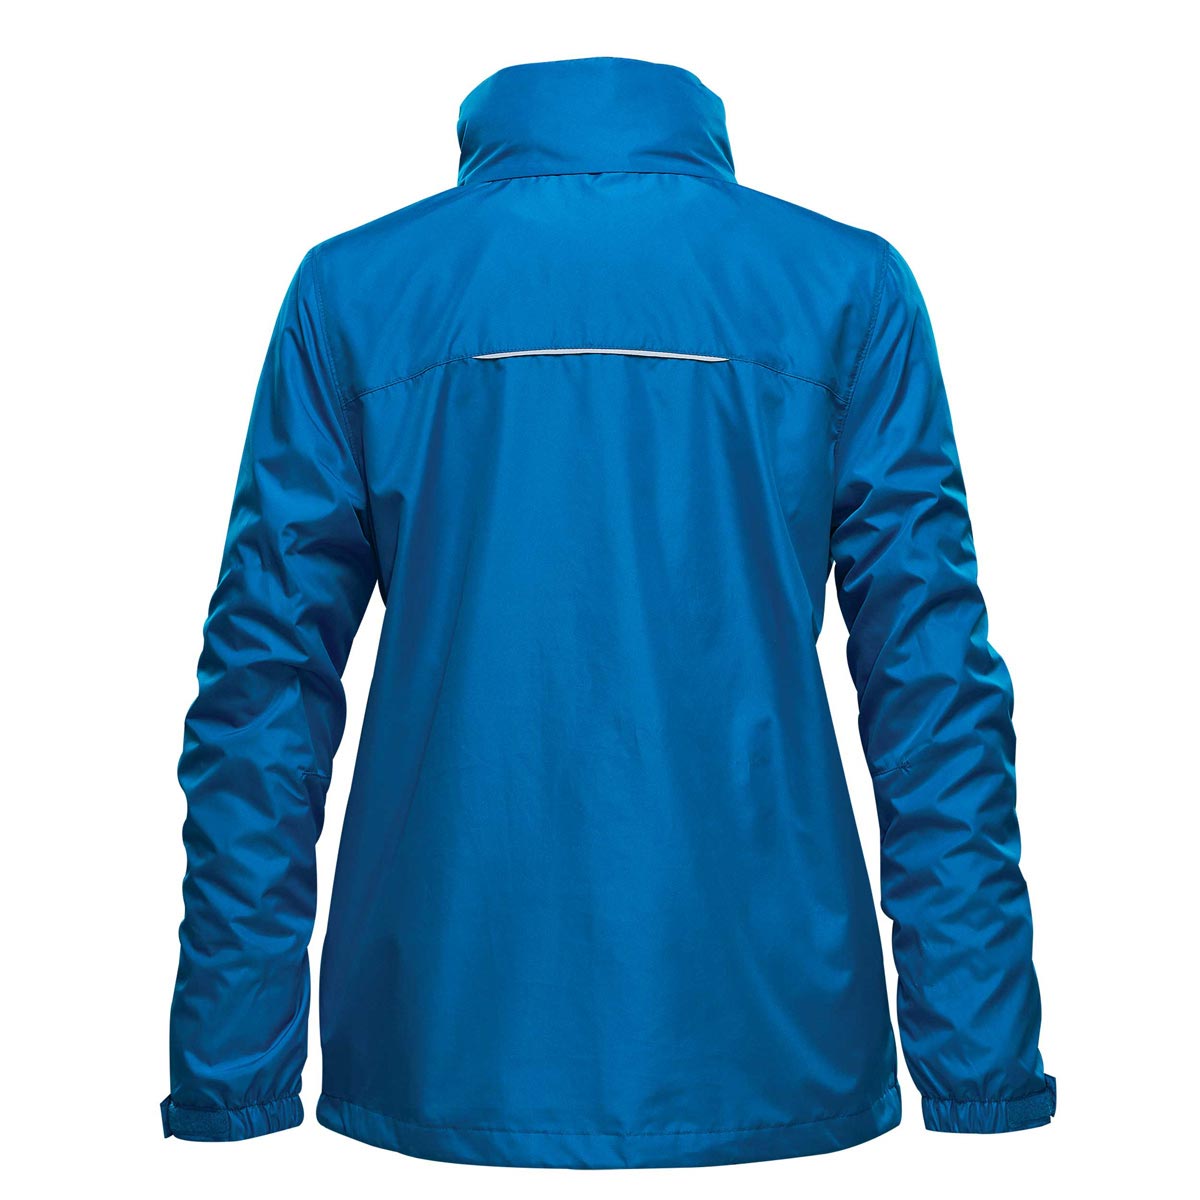 Stormtech Women's Dolphin Mistral Fleece Jacket